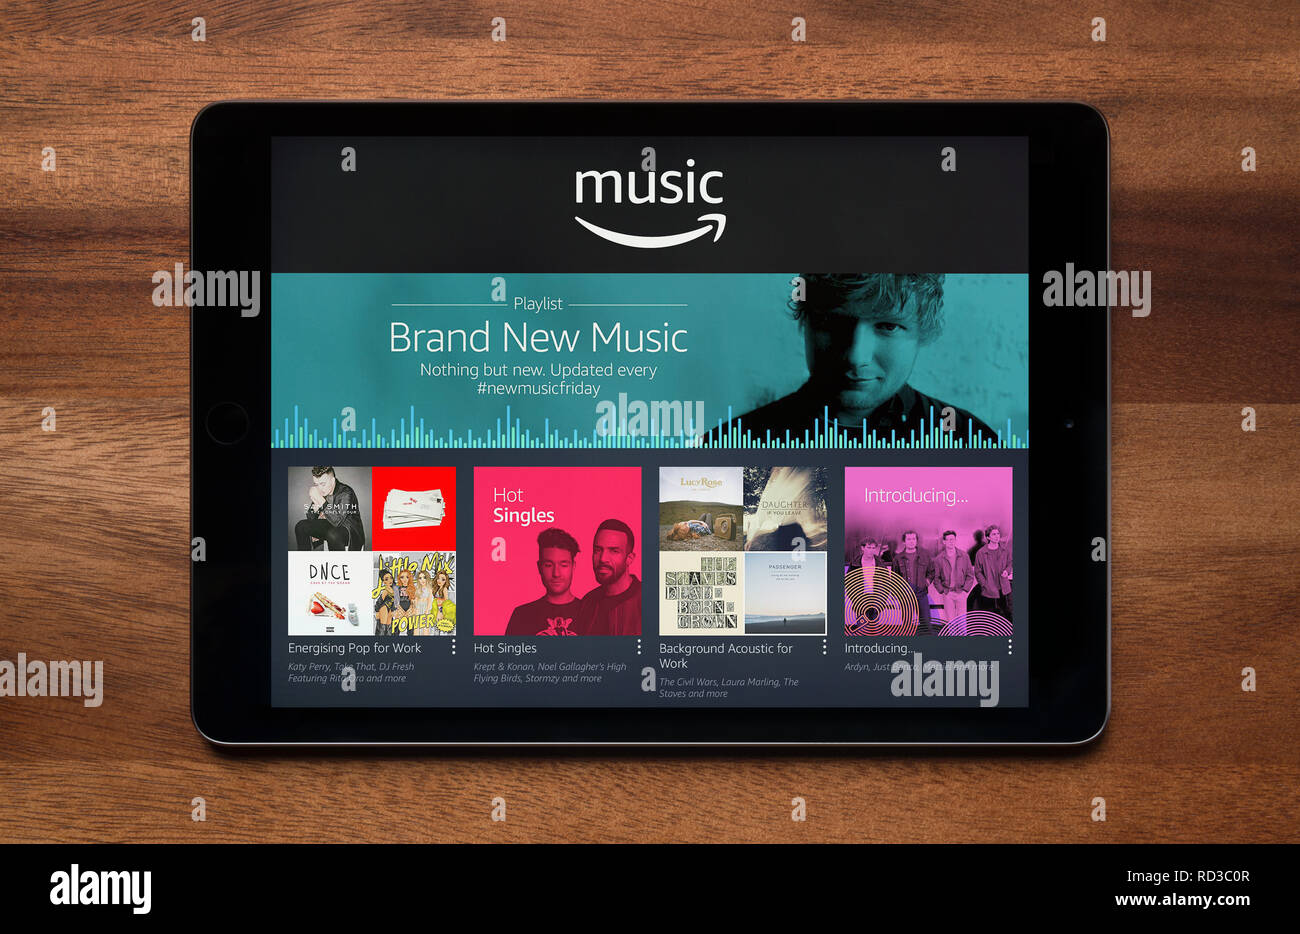 Amazon musik app -Fotos und -Bildmaterial in hoher Auflösung – Alamy